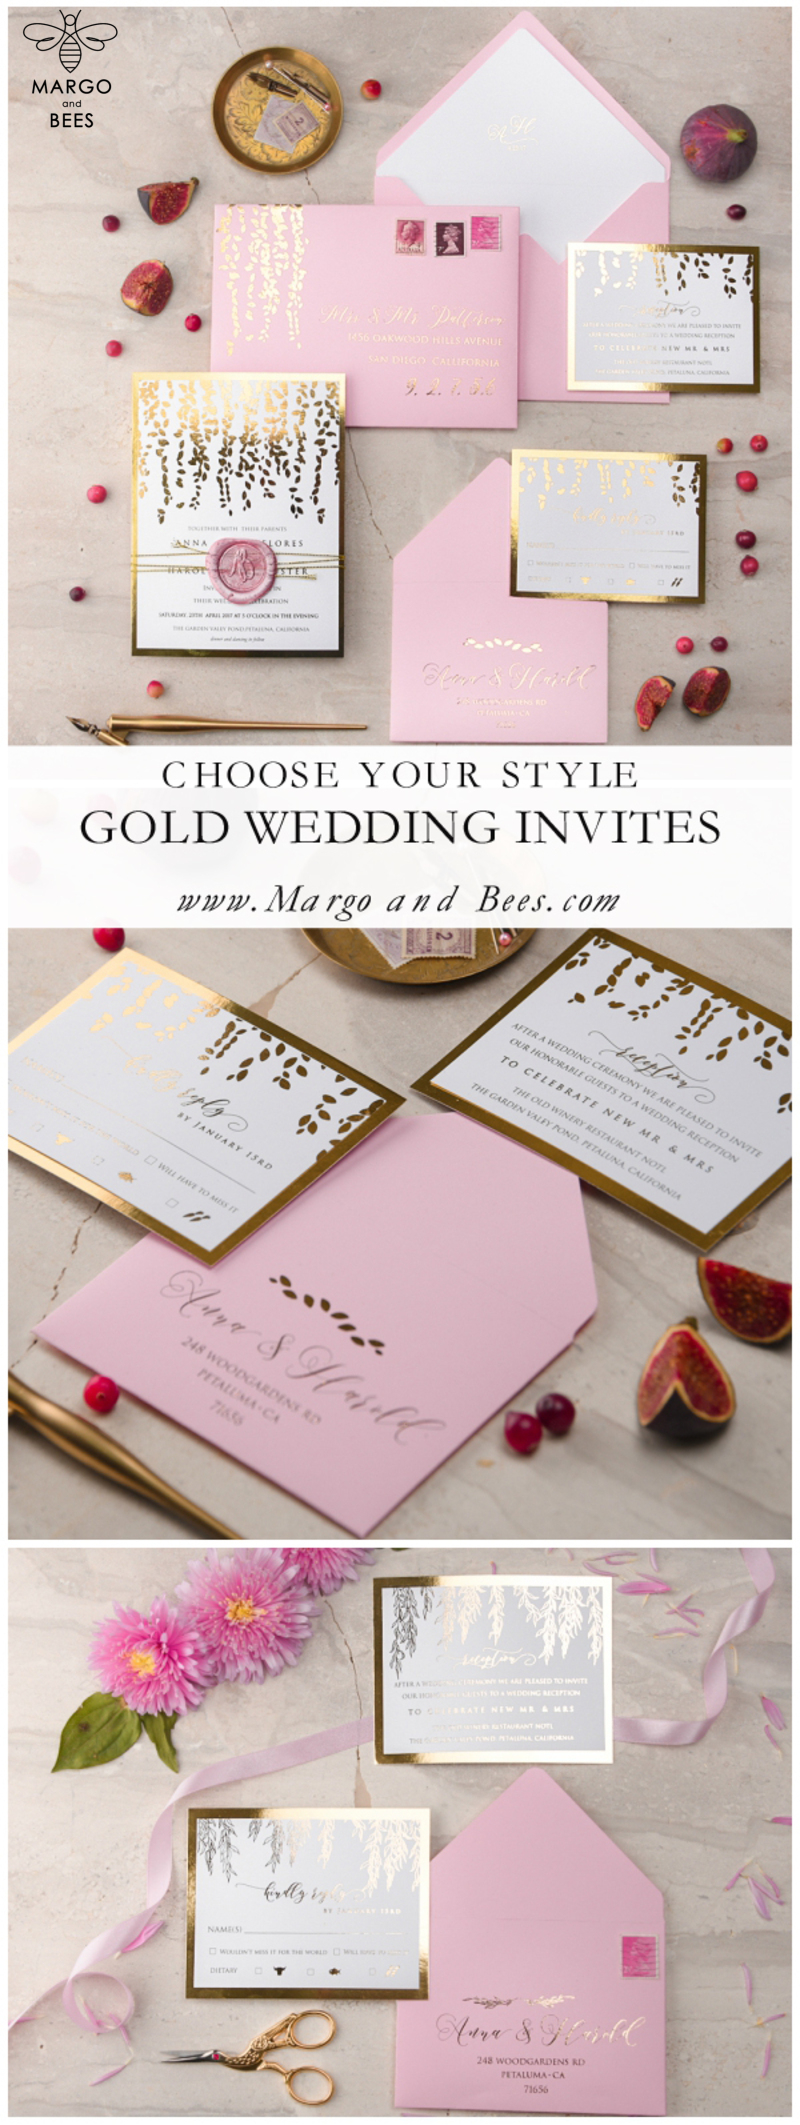 luxory wedding invitations, shiny glitter style invites, elegant romantic wedding invitation suite-8